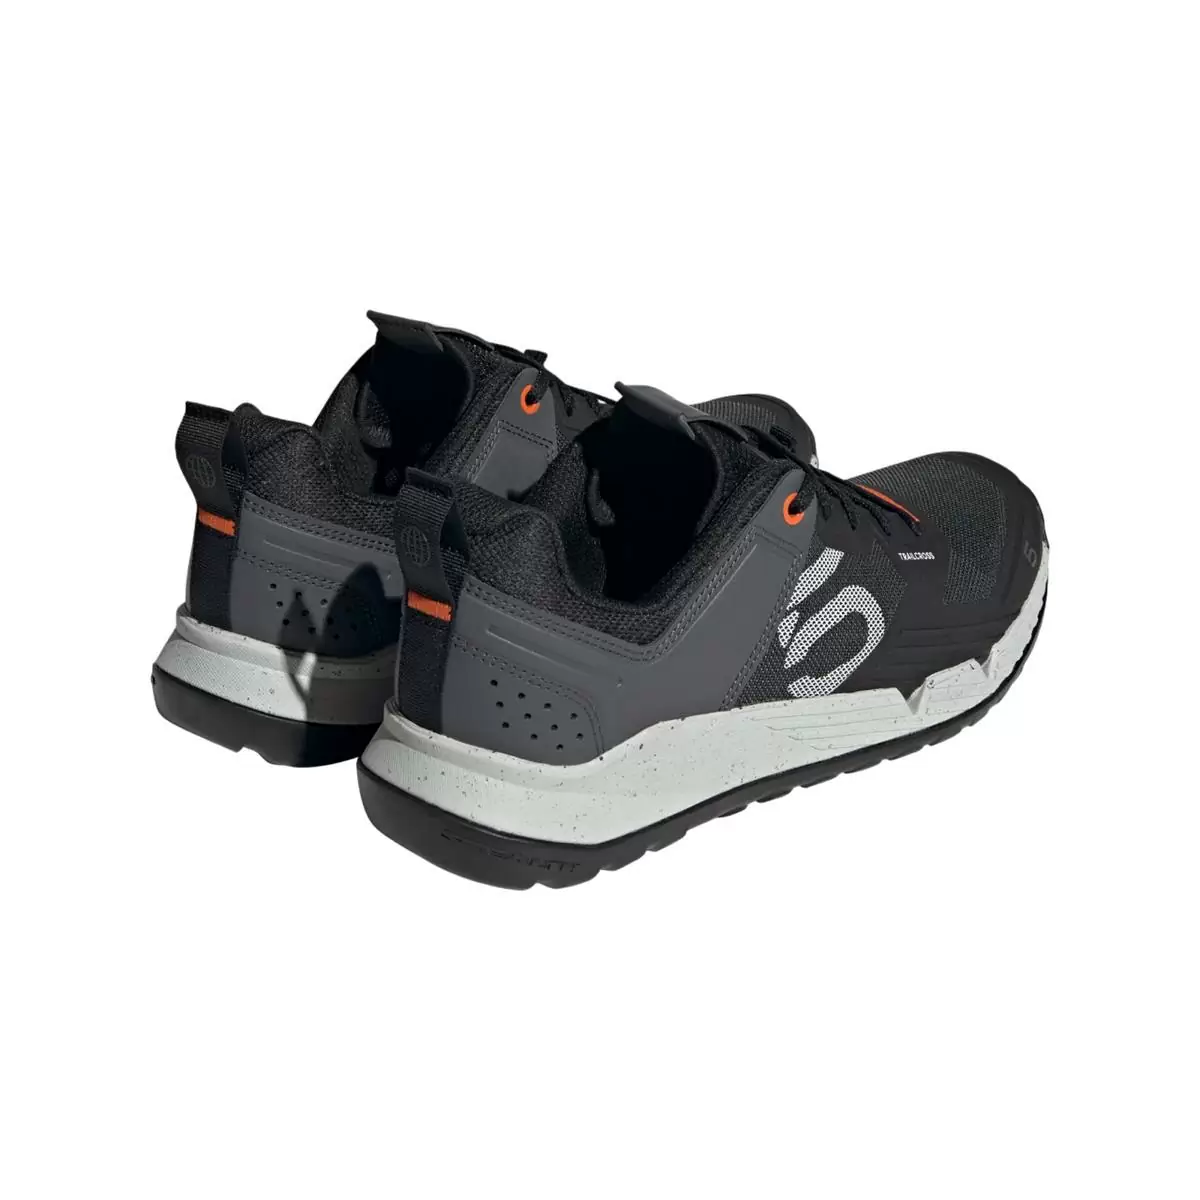 5.10 Trailcross XT Flat MTB Shoes Black/Grey Size 44.5 #5